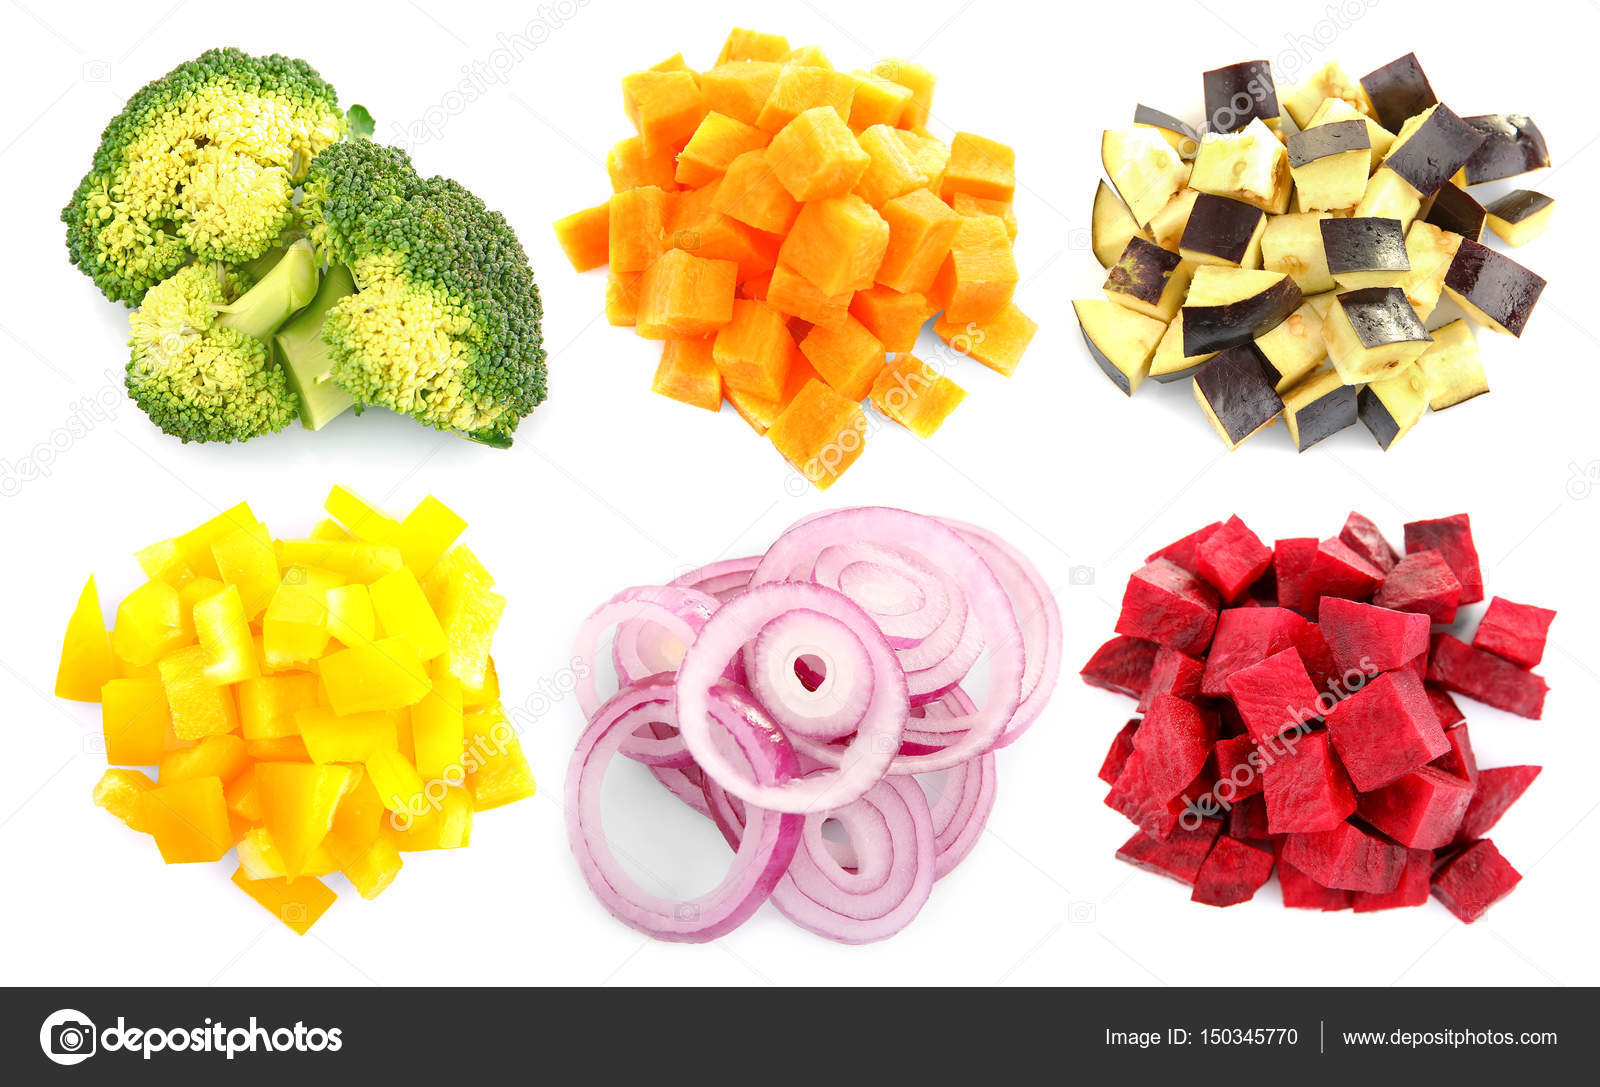 https://st3.depositphotos.com/1177973/15034/i/1600/depositphotos_150345770-stock-photo-variety-of-chopped-vegetables.jpg